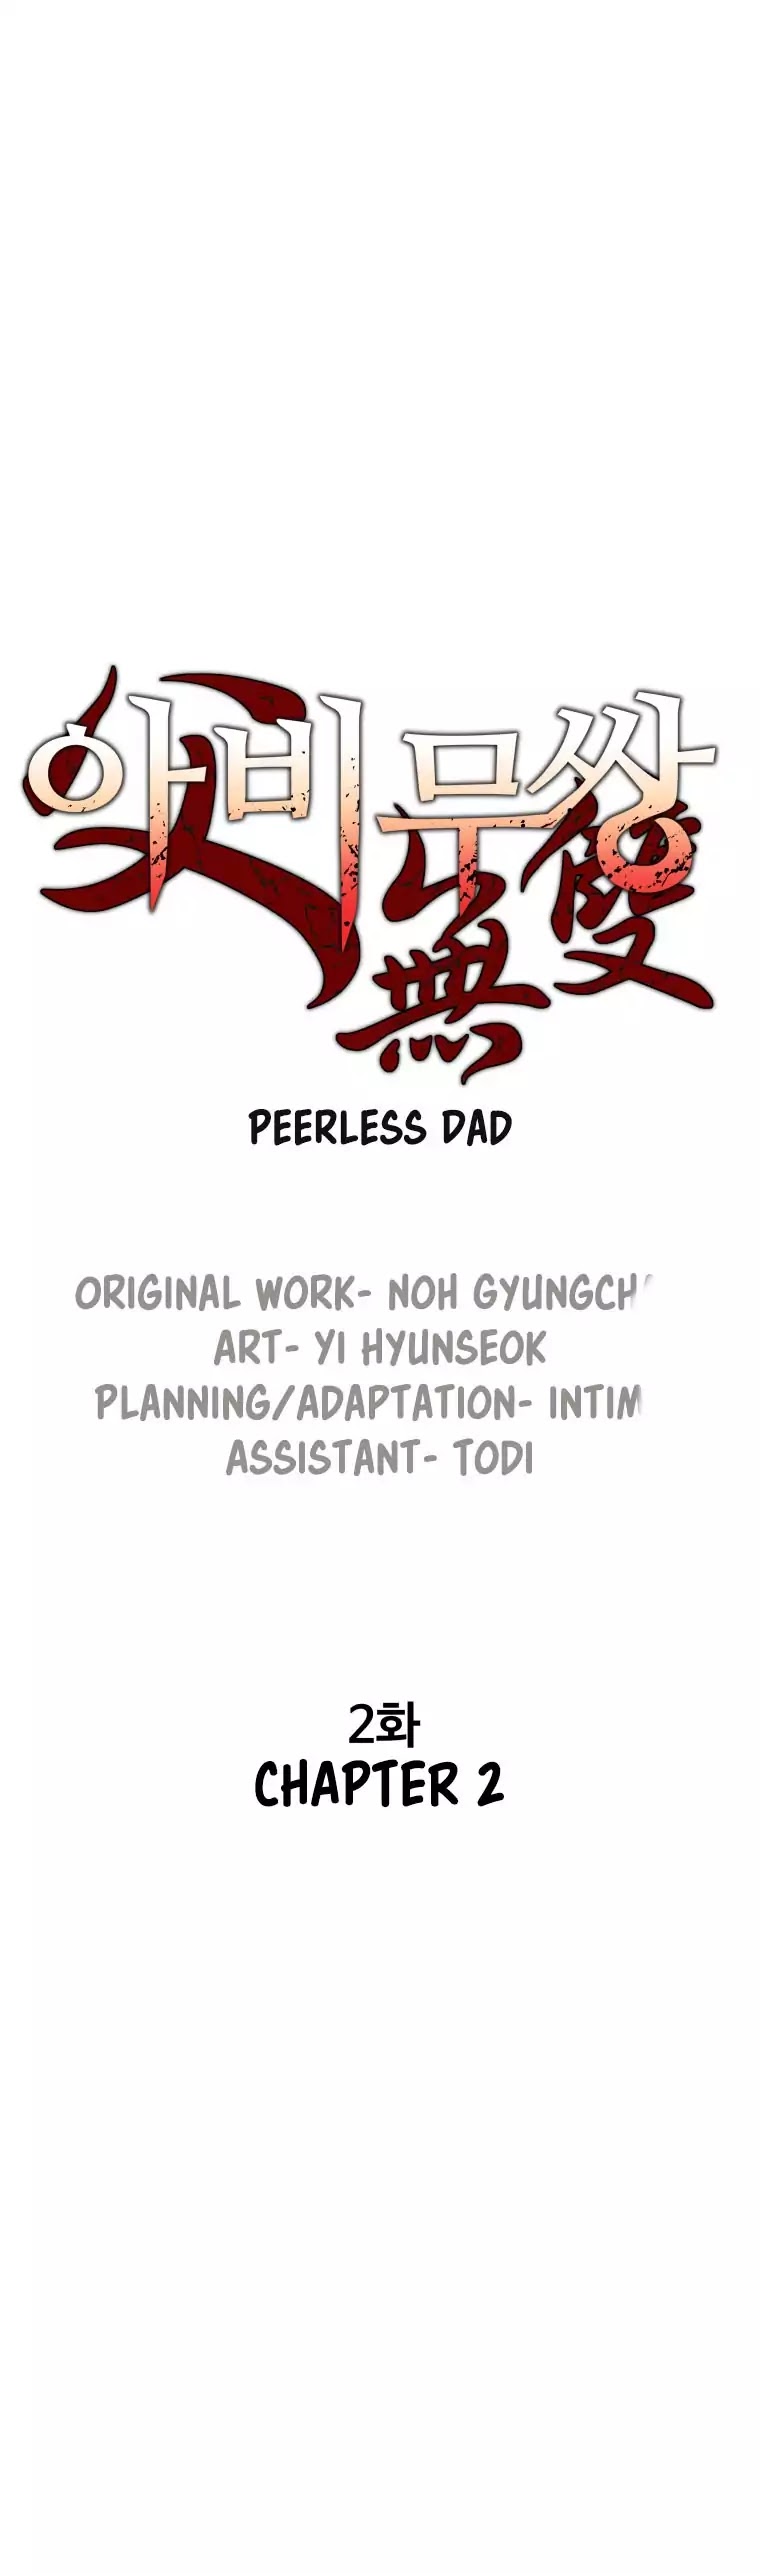 Peerless Dad - Chapter 6680 - Image 1